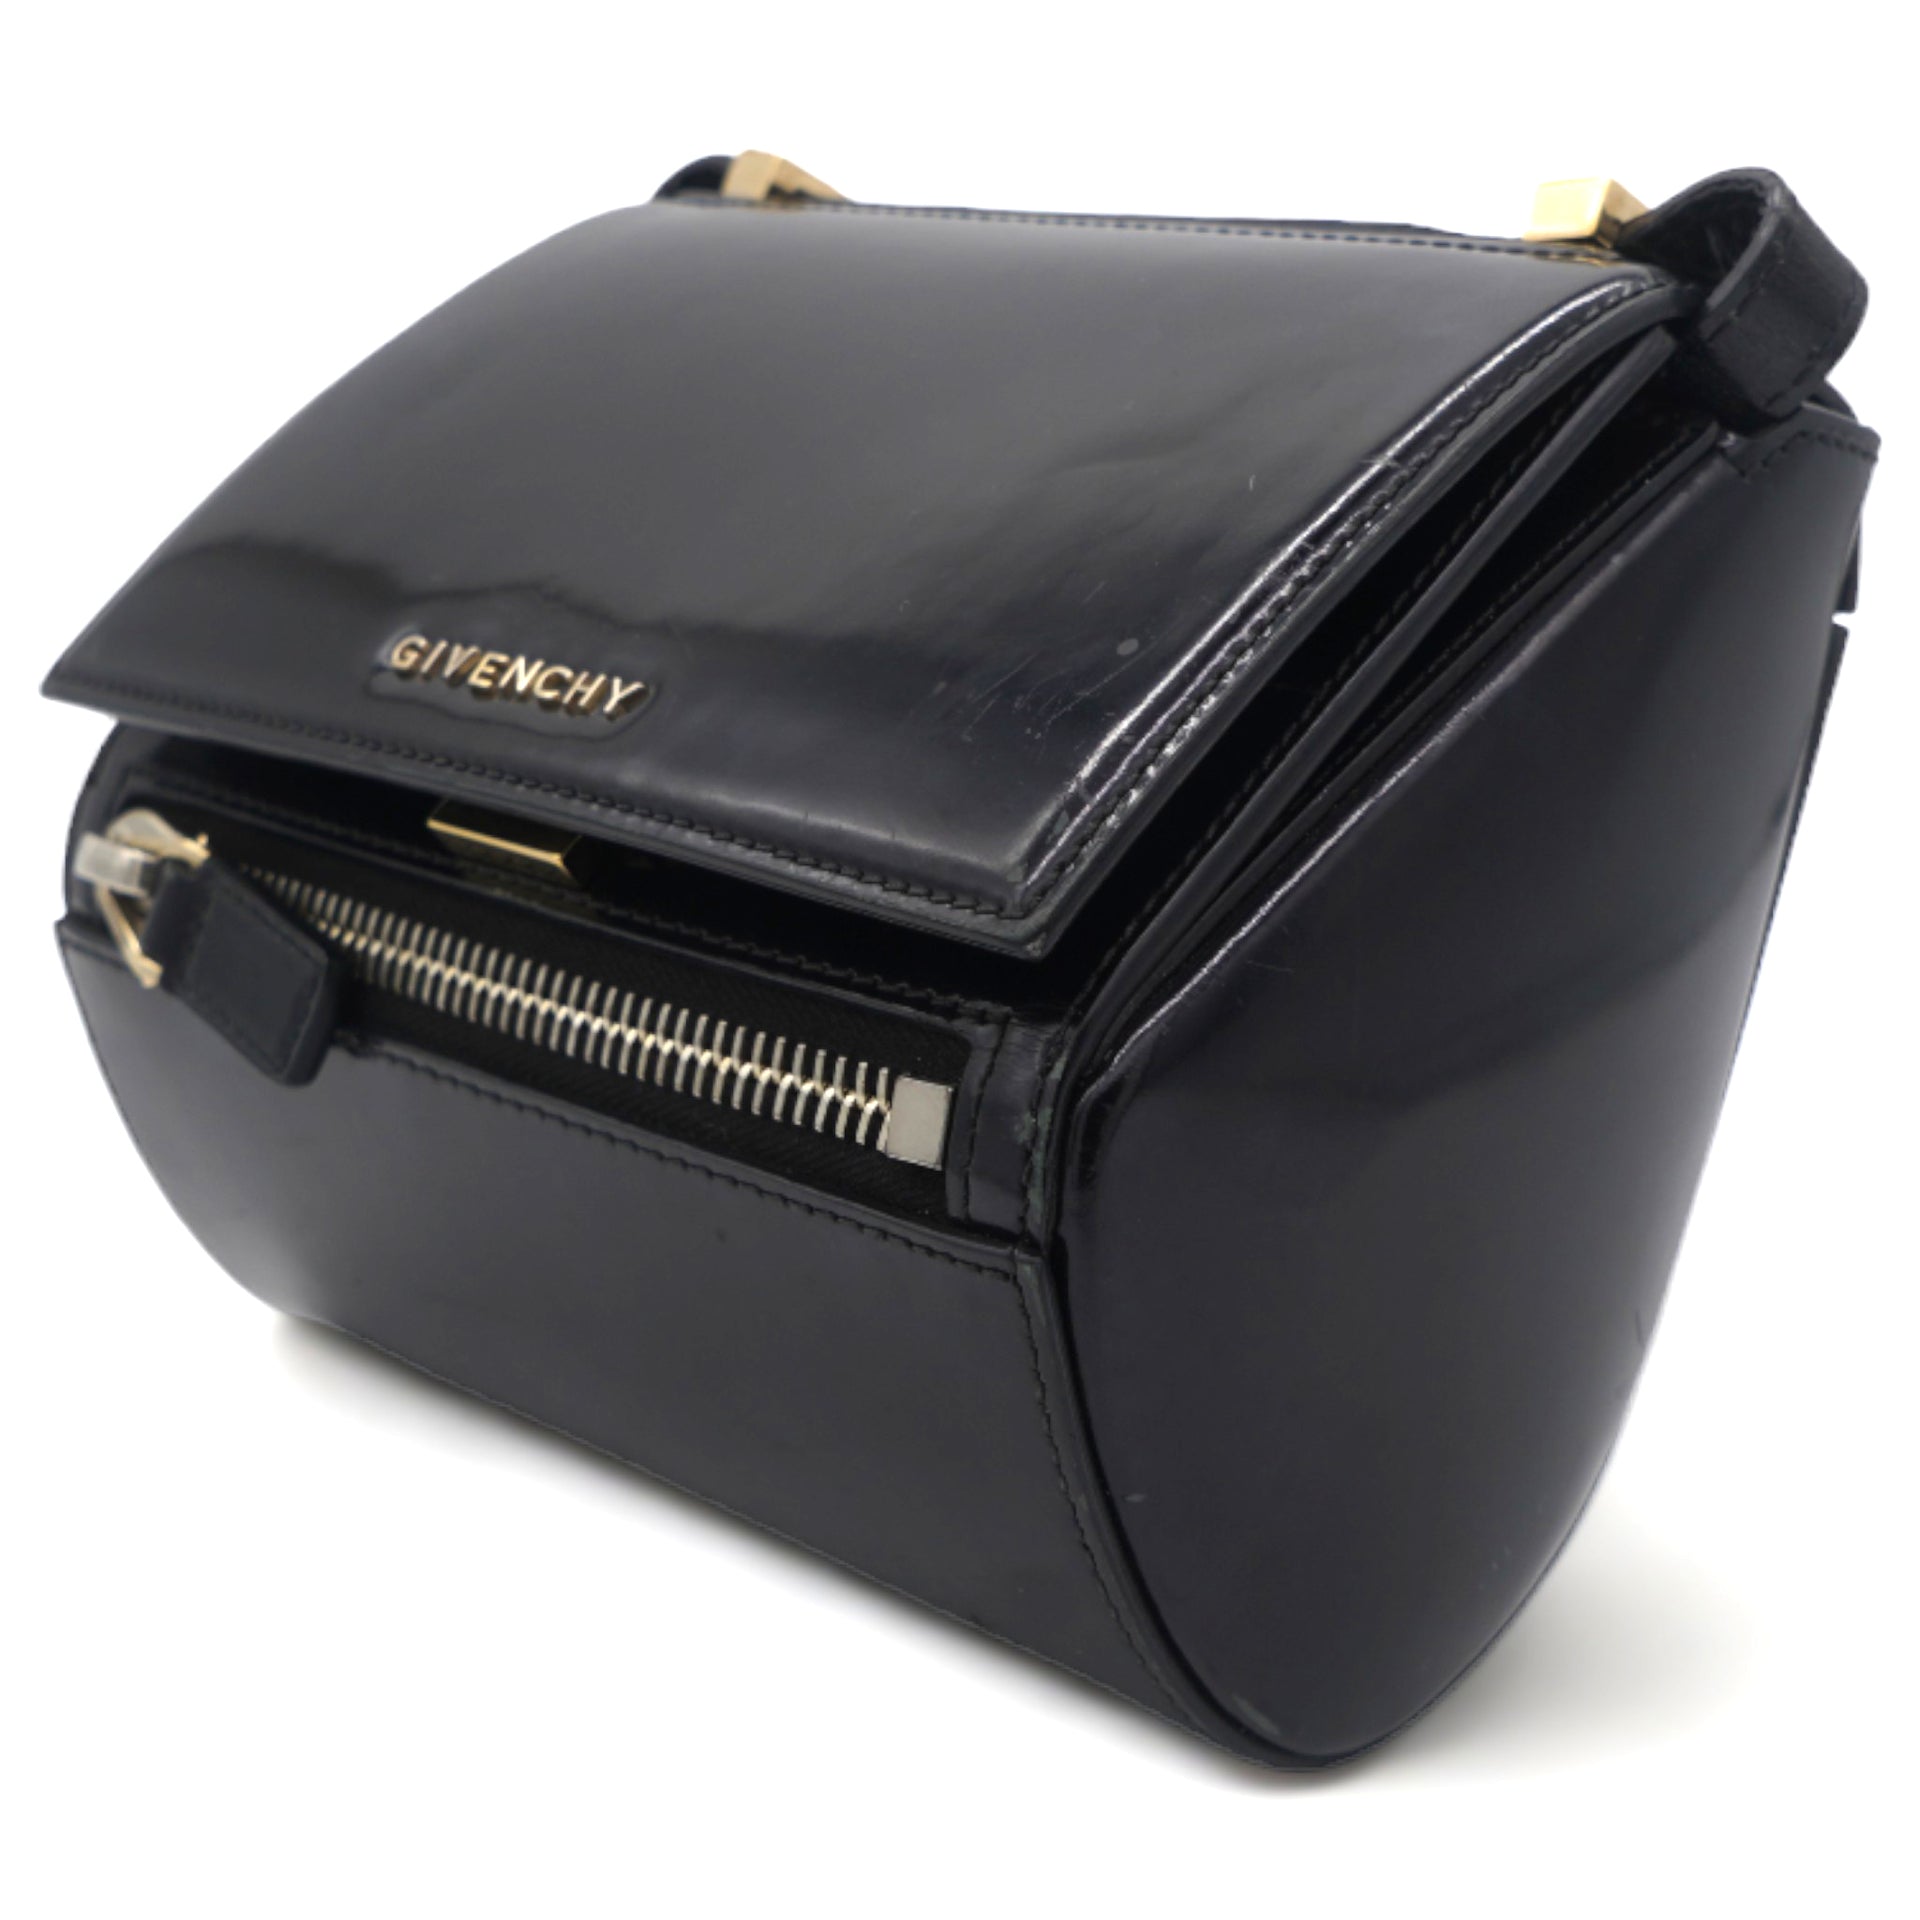 Black Box Leather Pandora Box Mini Crossbody Bag